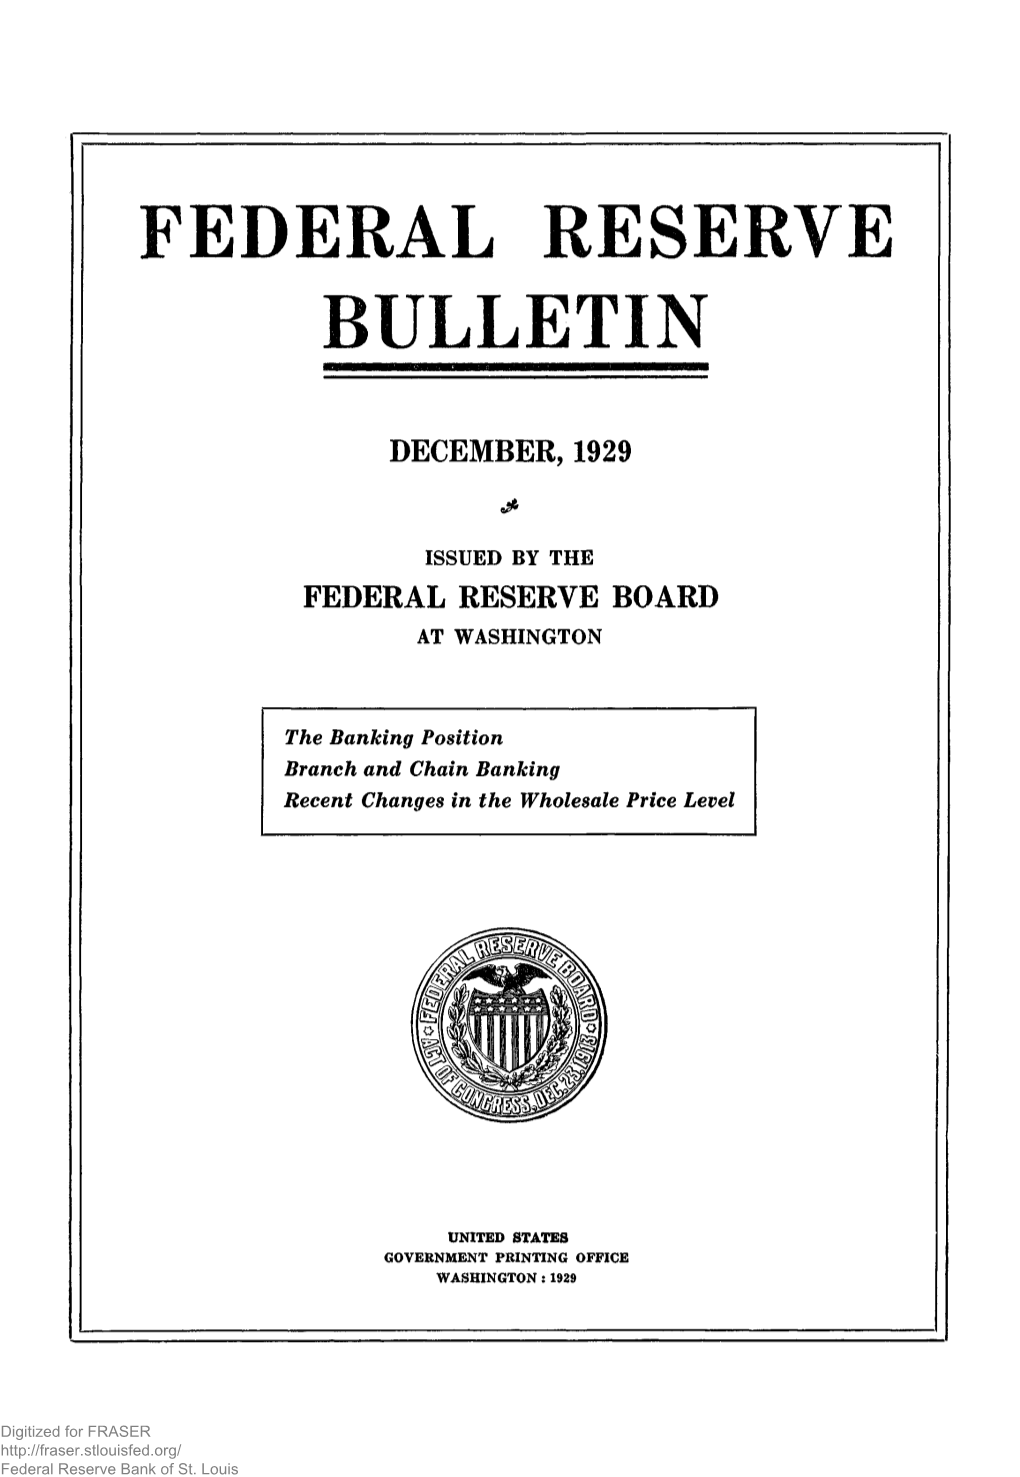 Federal Reserve Bulletin December 1929